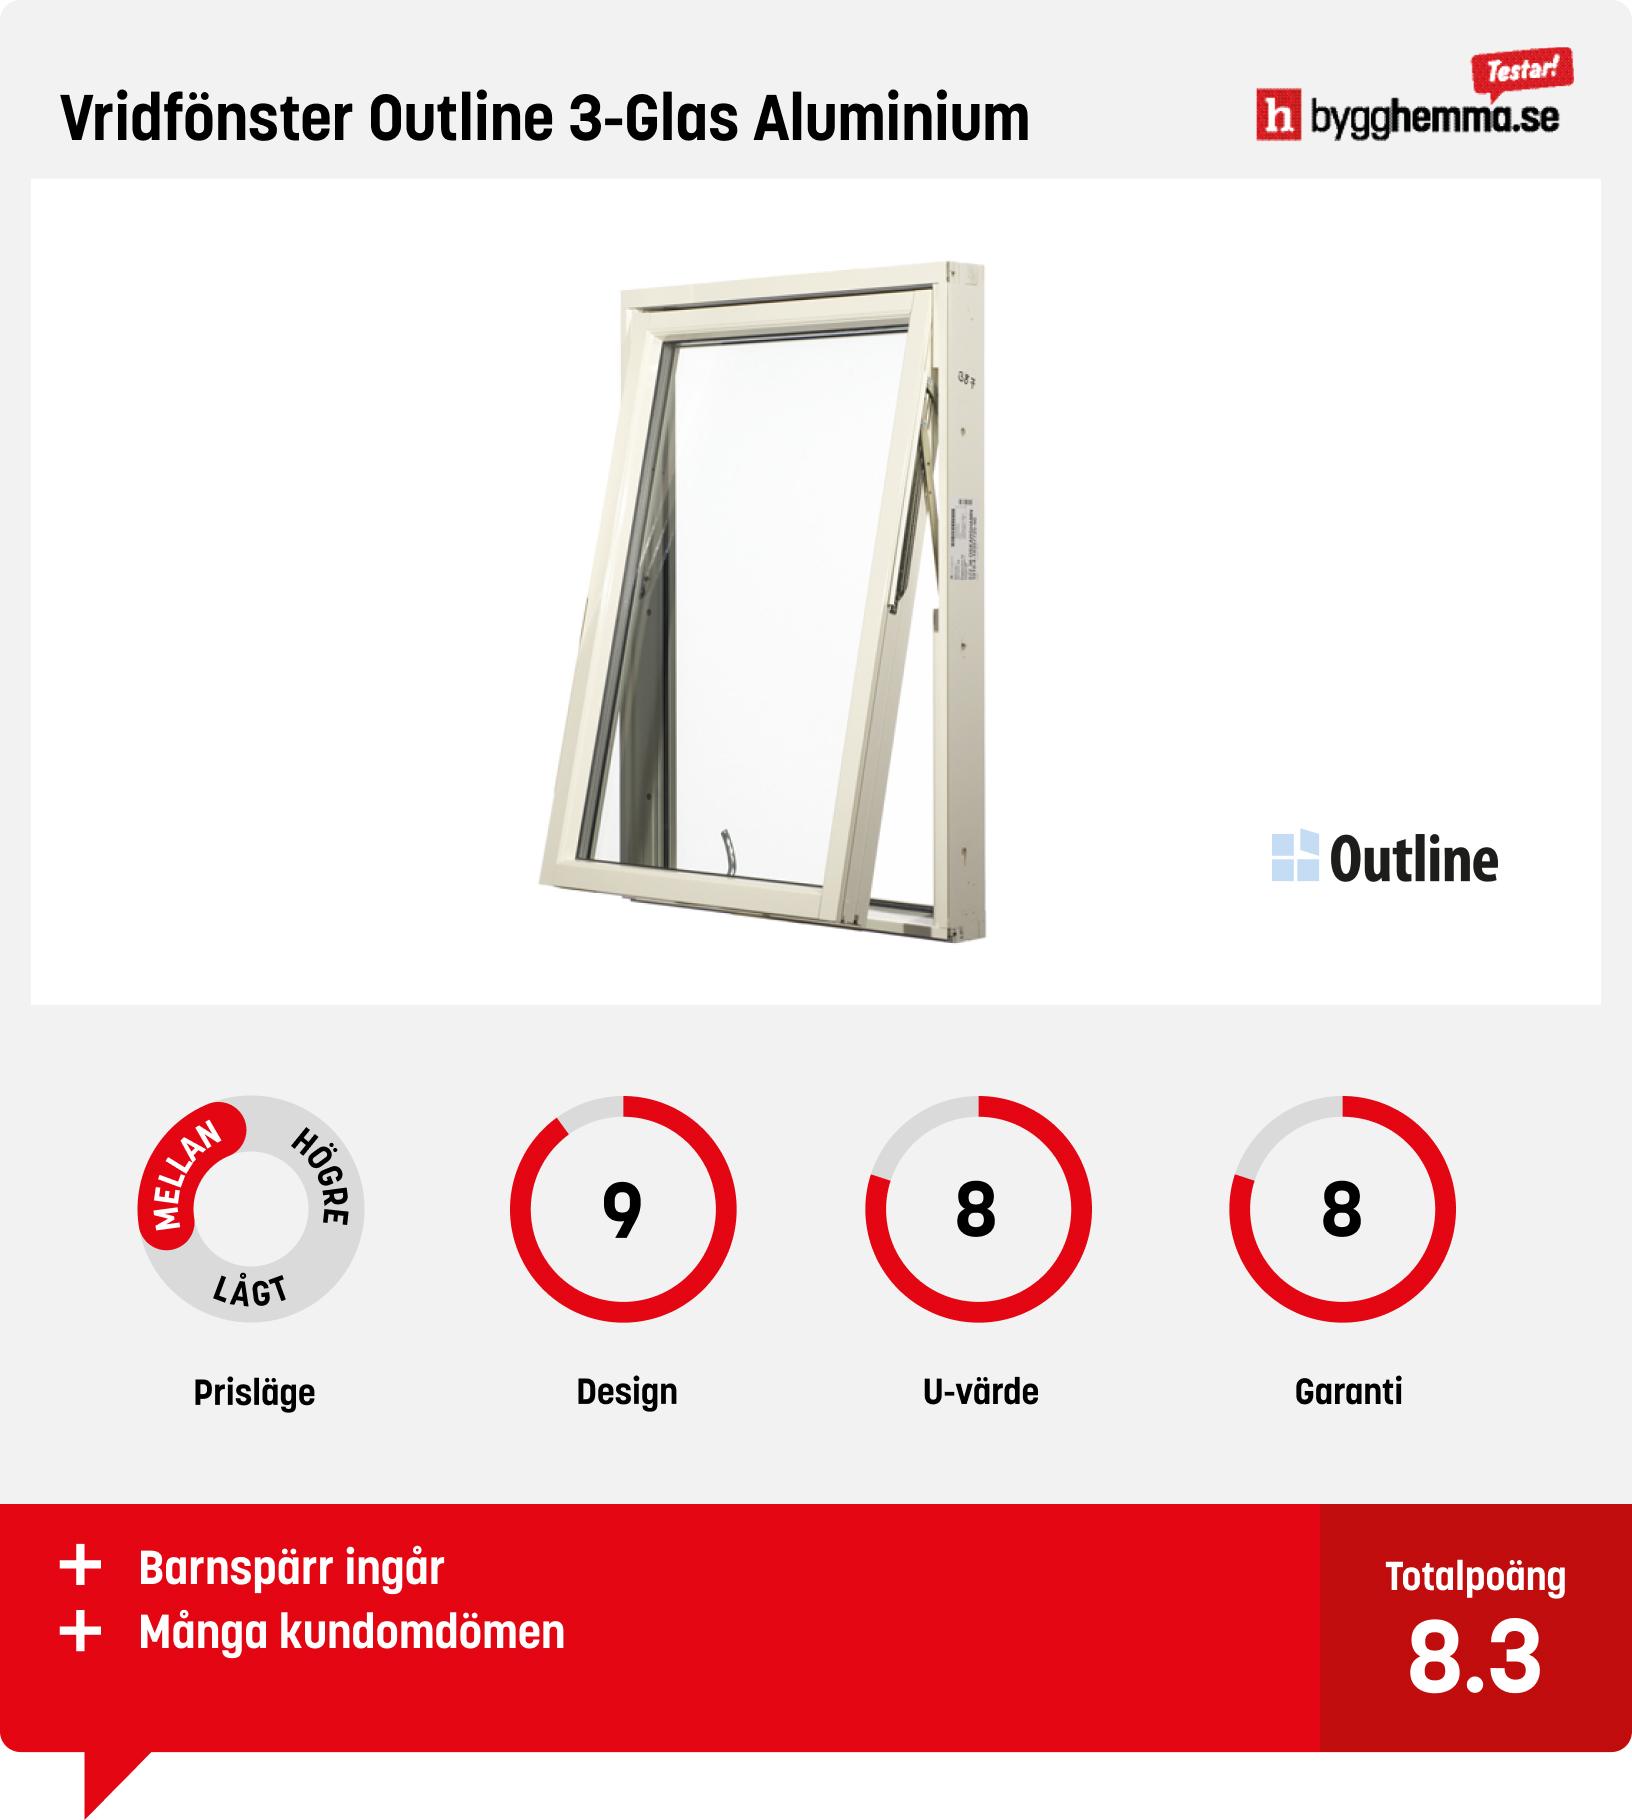 Aluminiumfönster test - Vridfönster Outline 3-Glas Aluminium